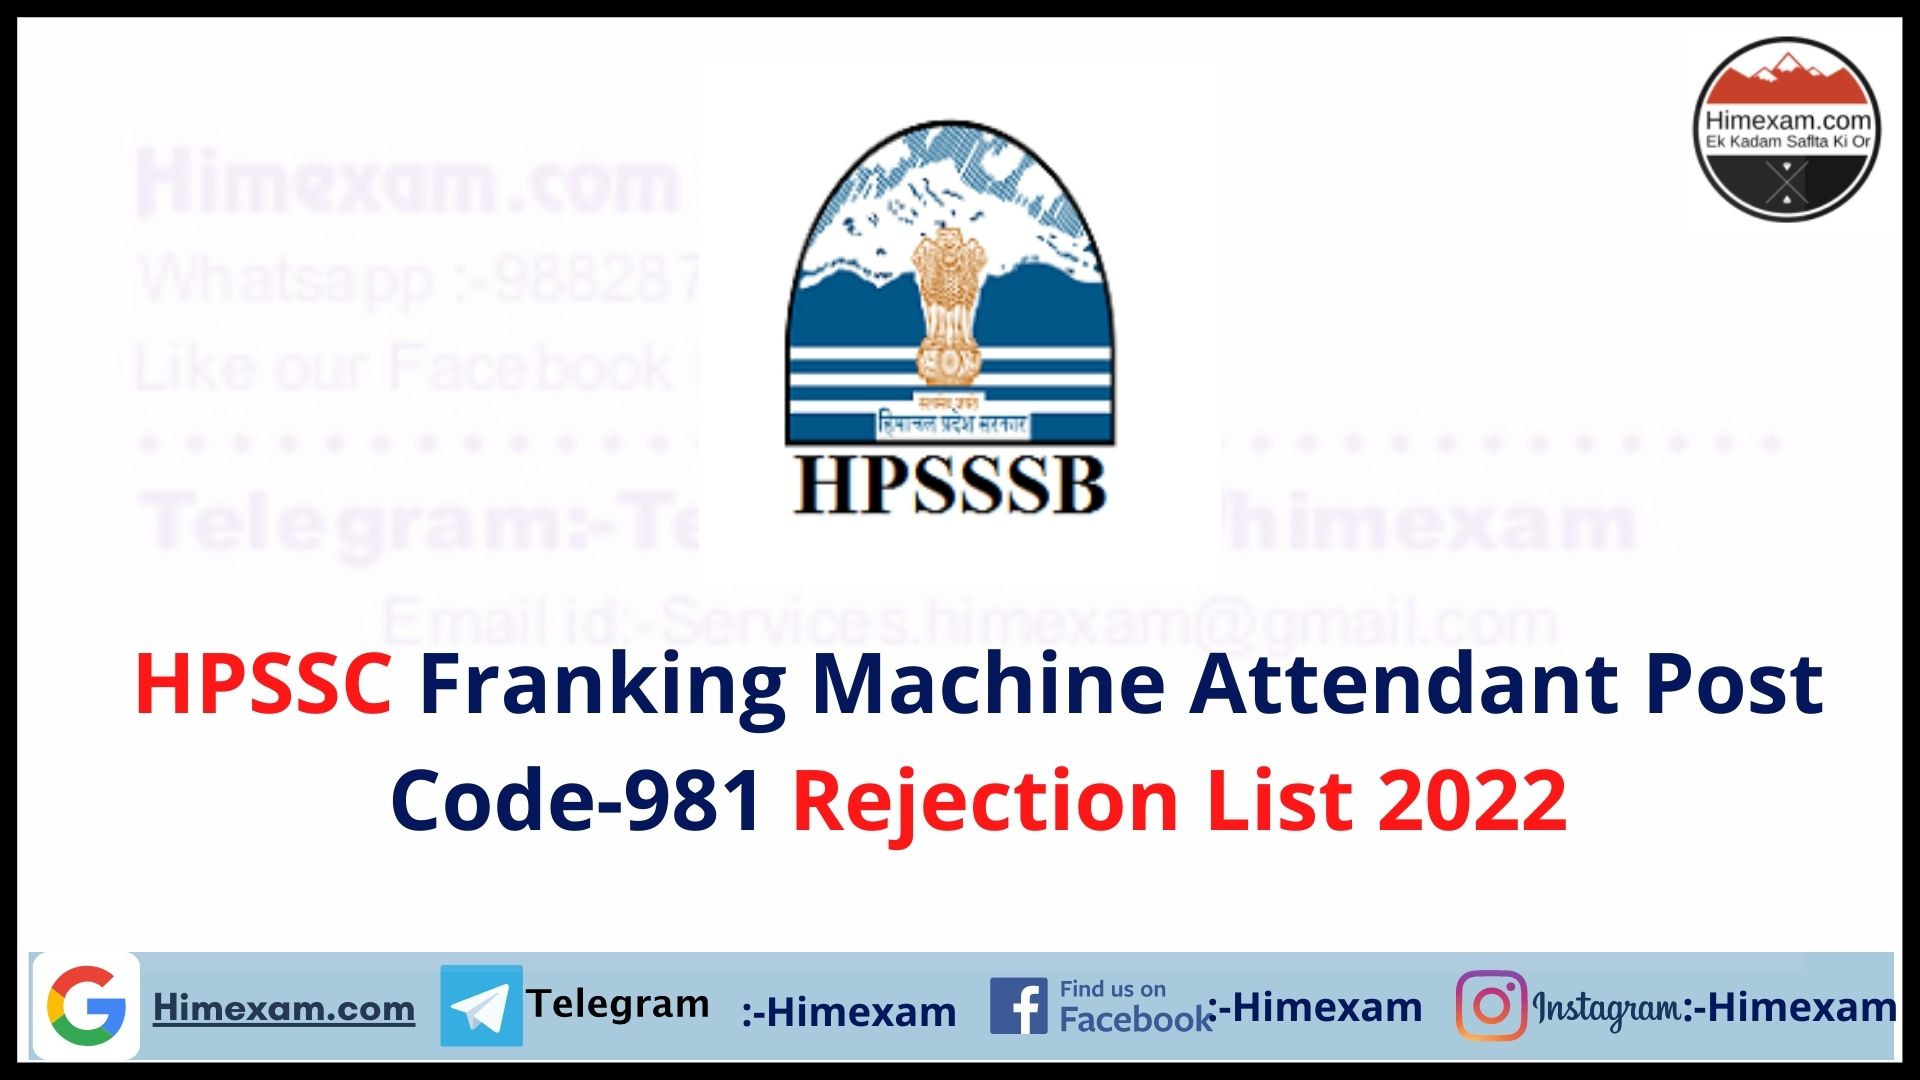 HPSSC Franking Machine Attendant Post Code-981 Rejection List 2022